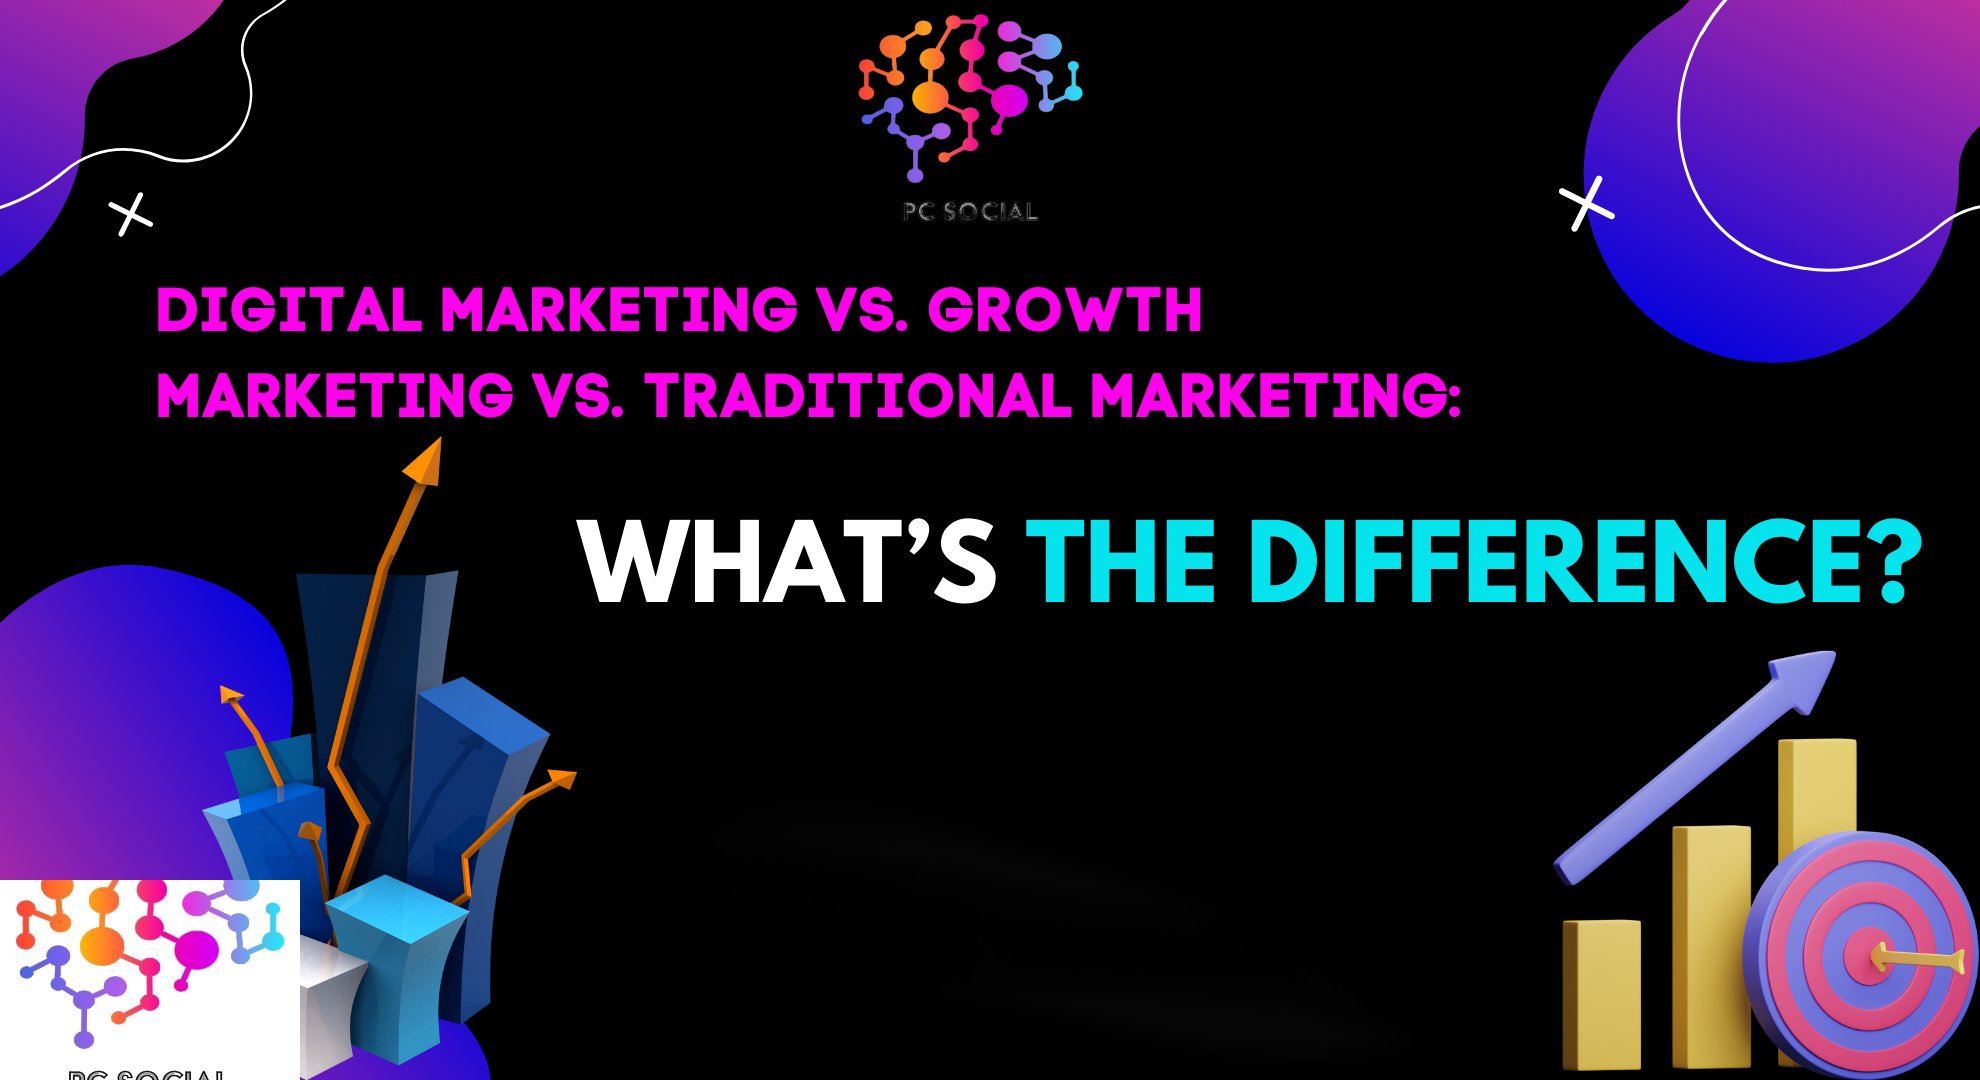 Marketing, Digital Marketing, Social Marketing, Research, Traditional Marketing, Social